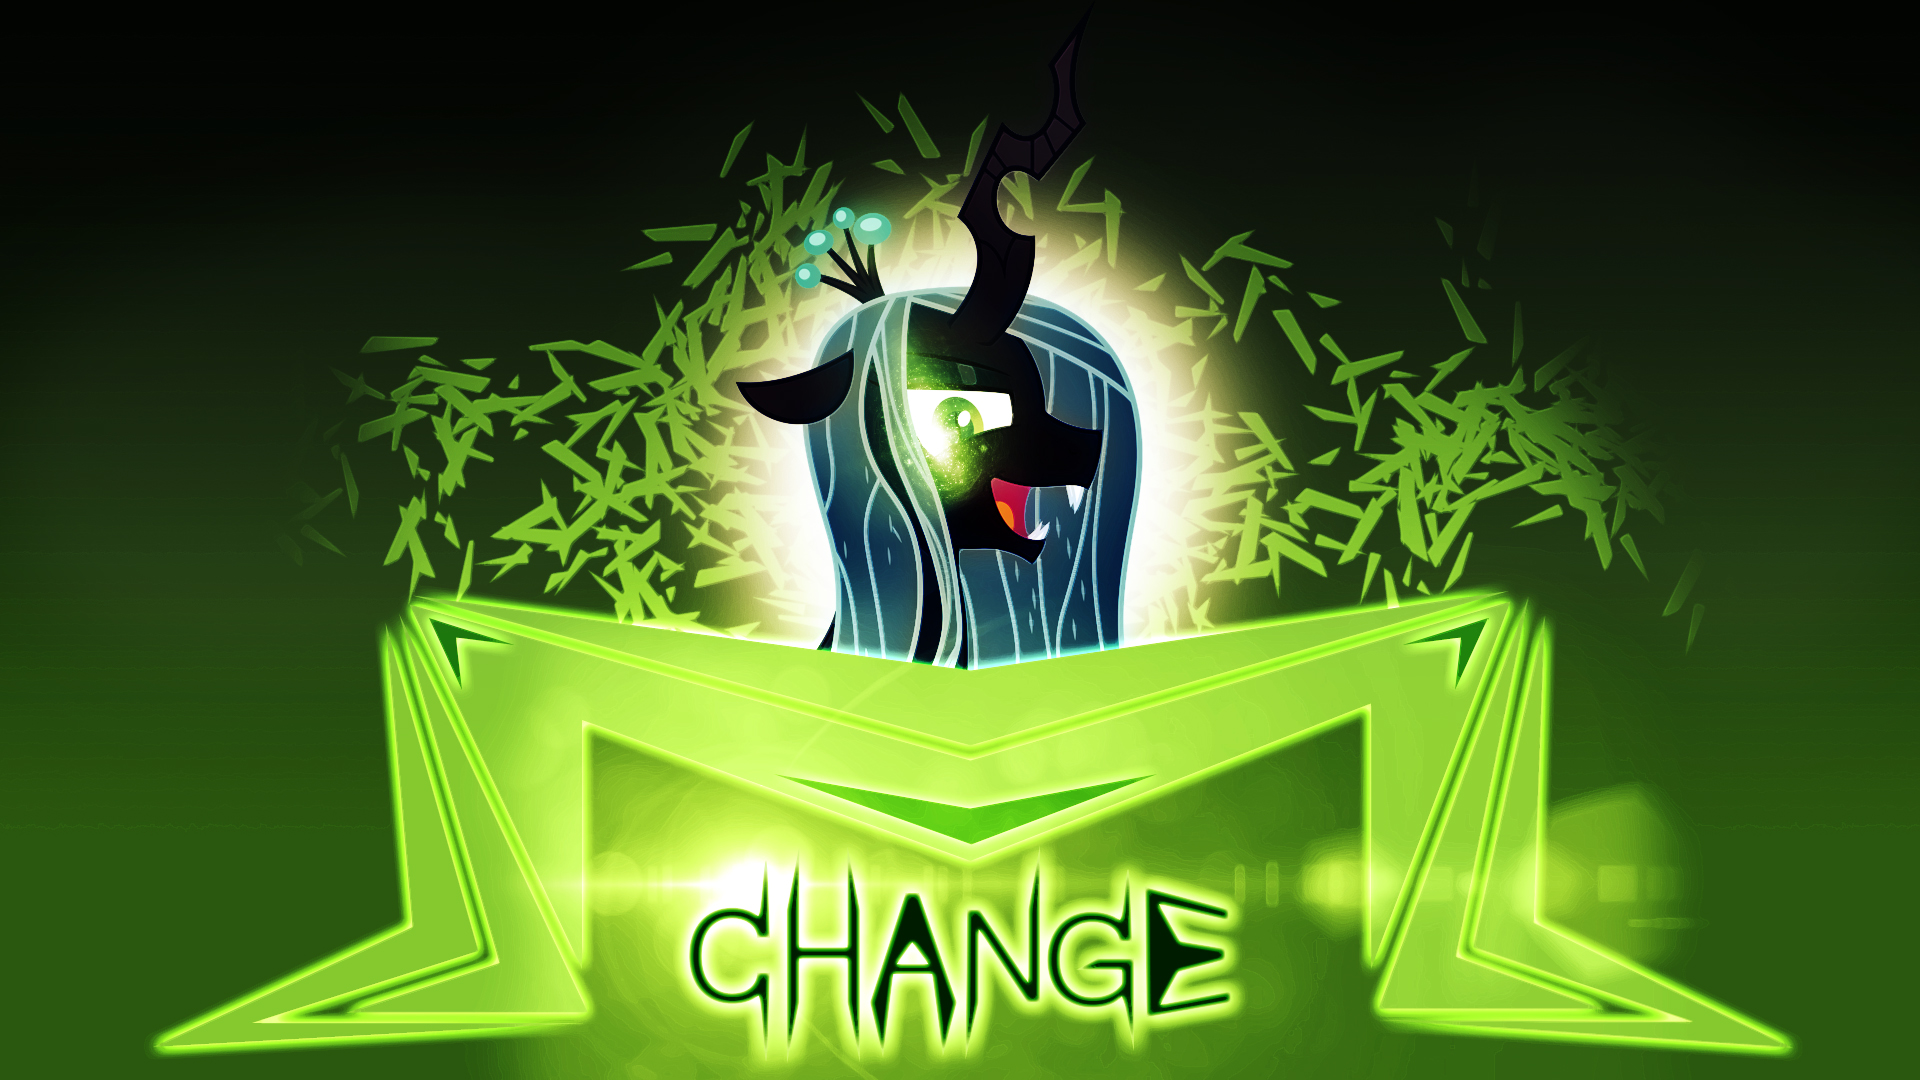 Change Like Chrysalis by Karl97 and Yanoda